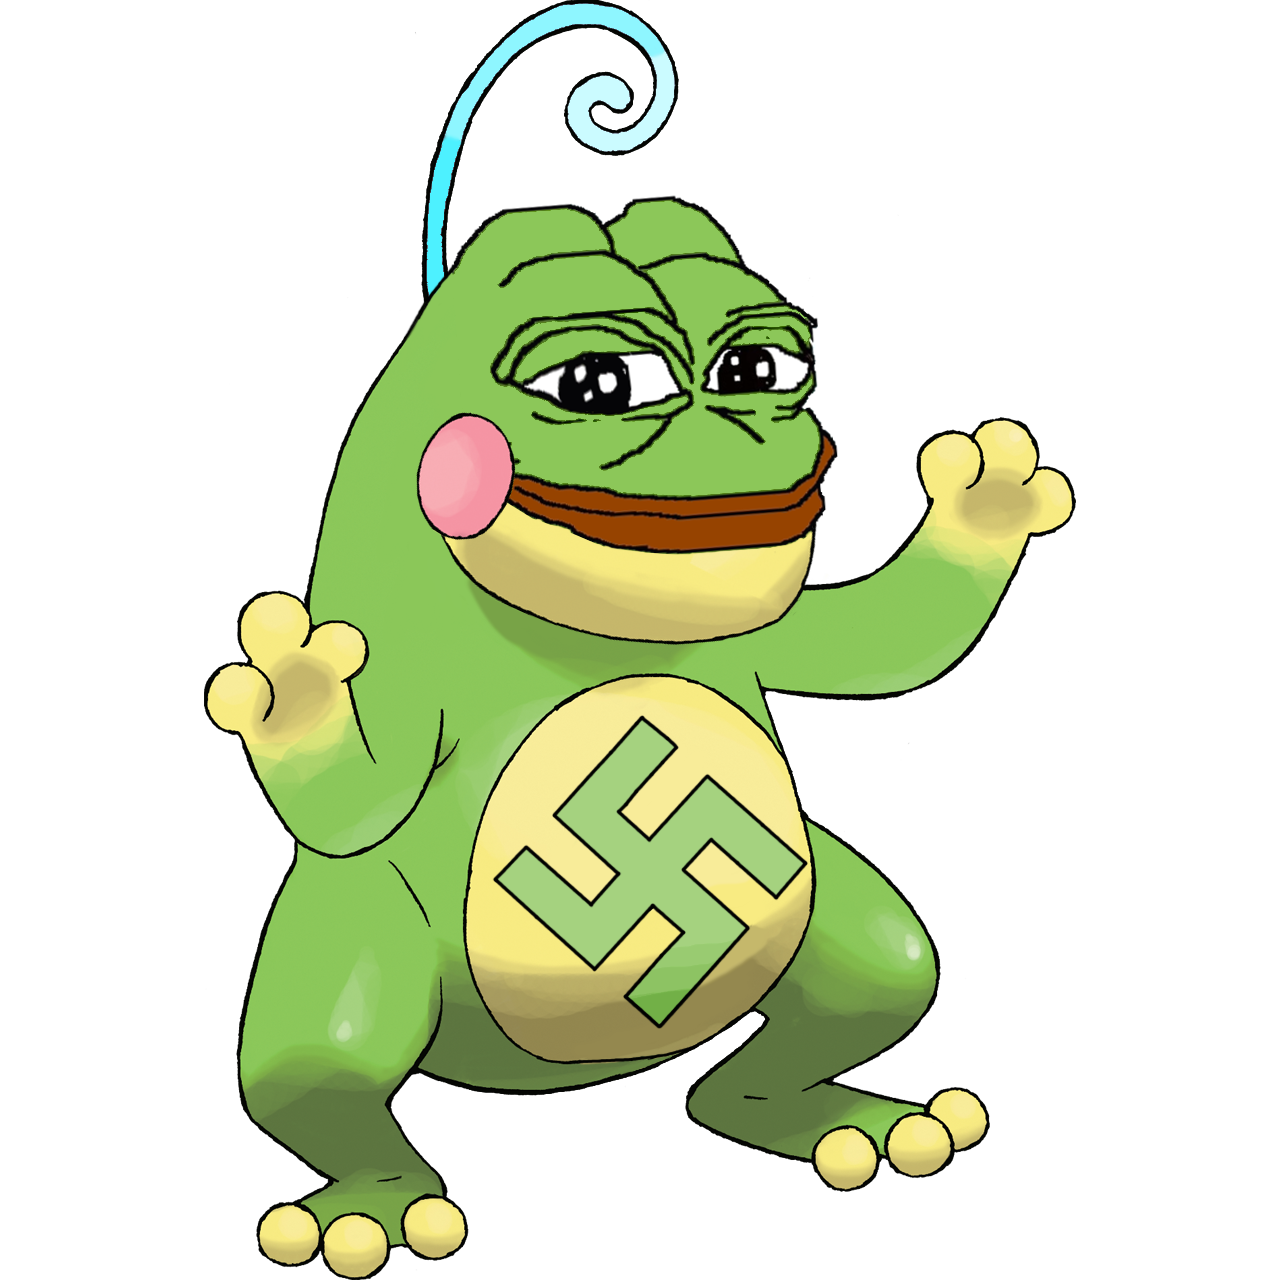 Pepe the Frog in versione nazi